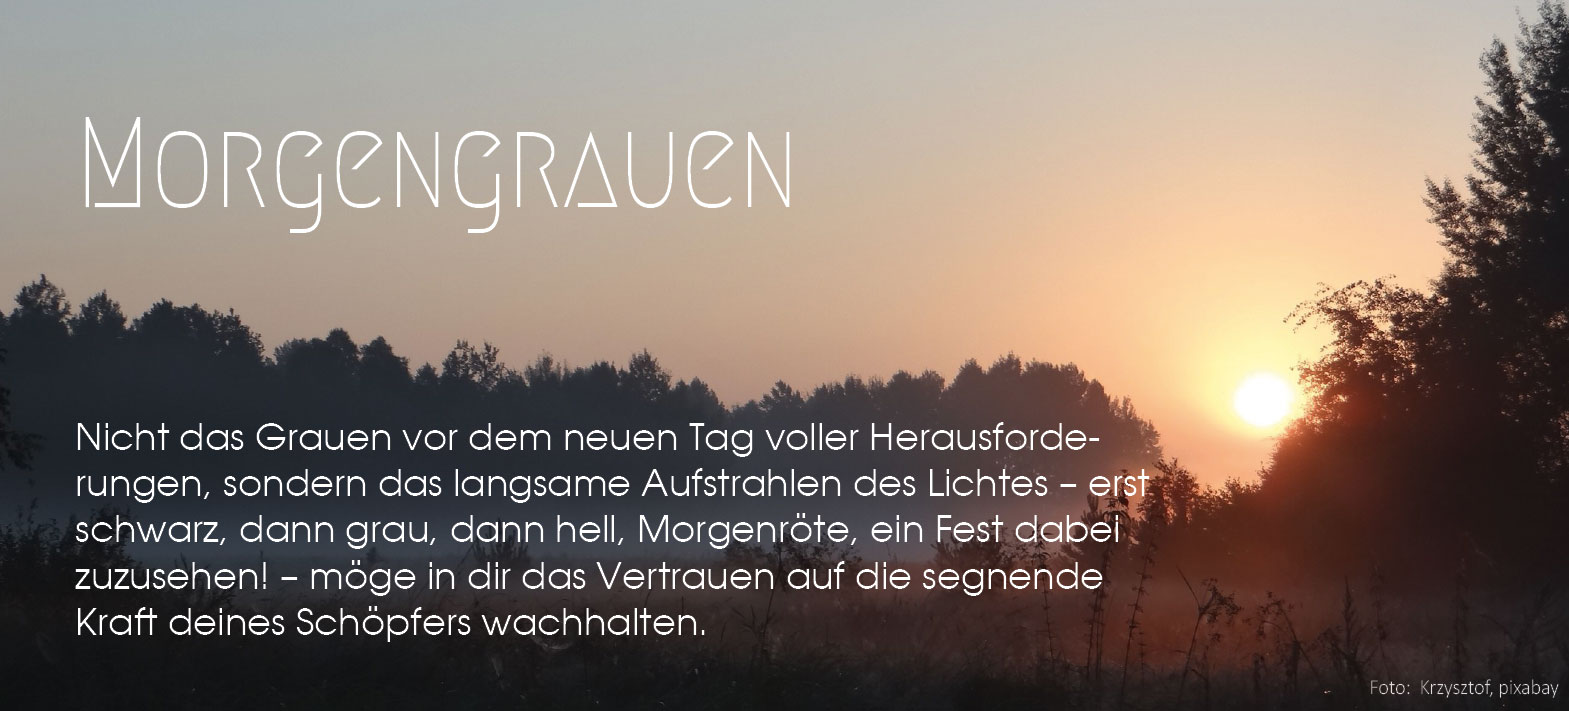 Morgengrauen (Foto: Krzysztof, pixabay)